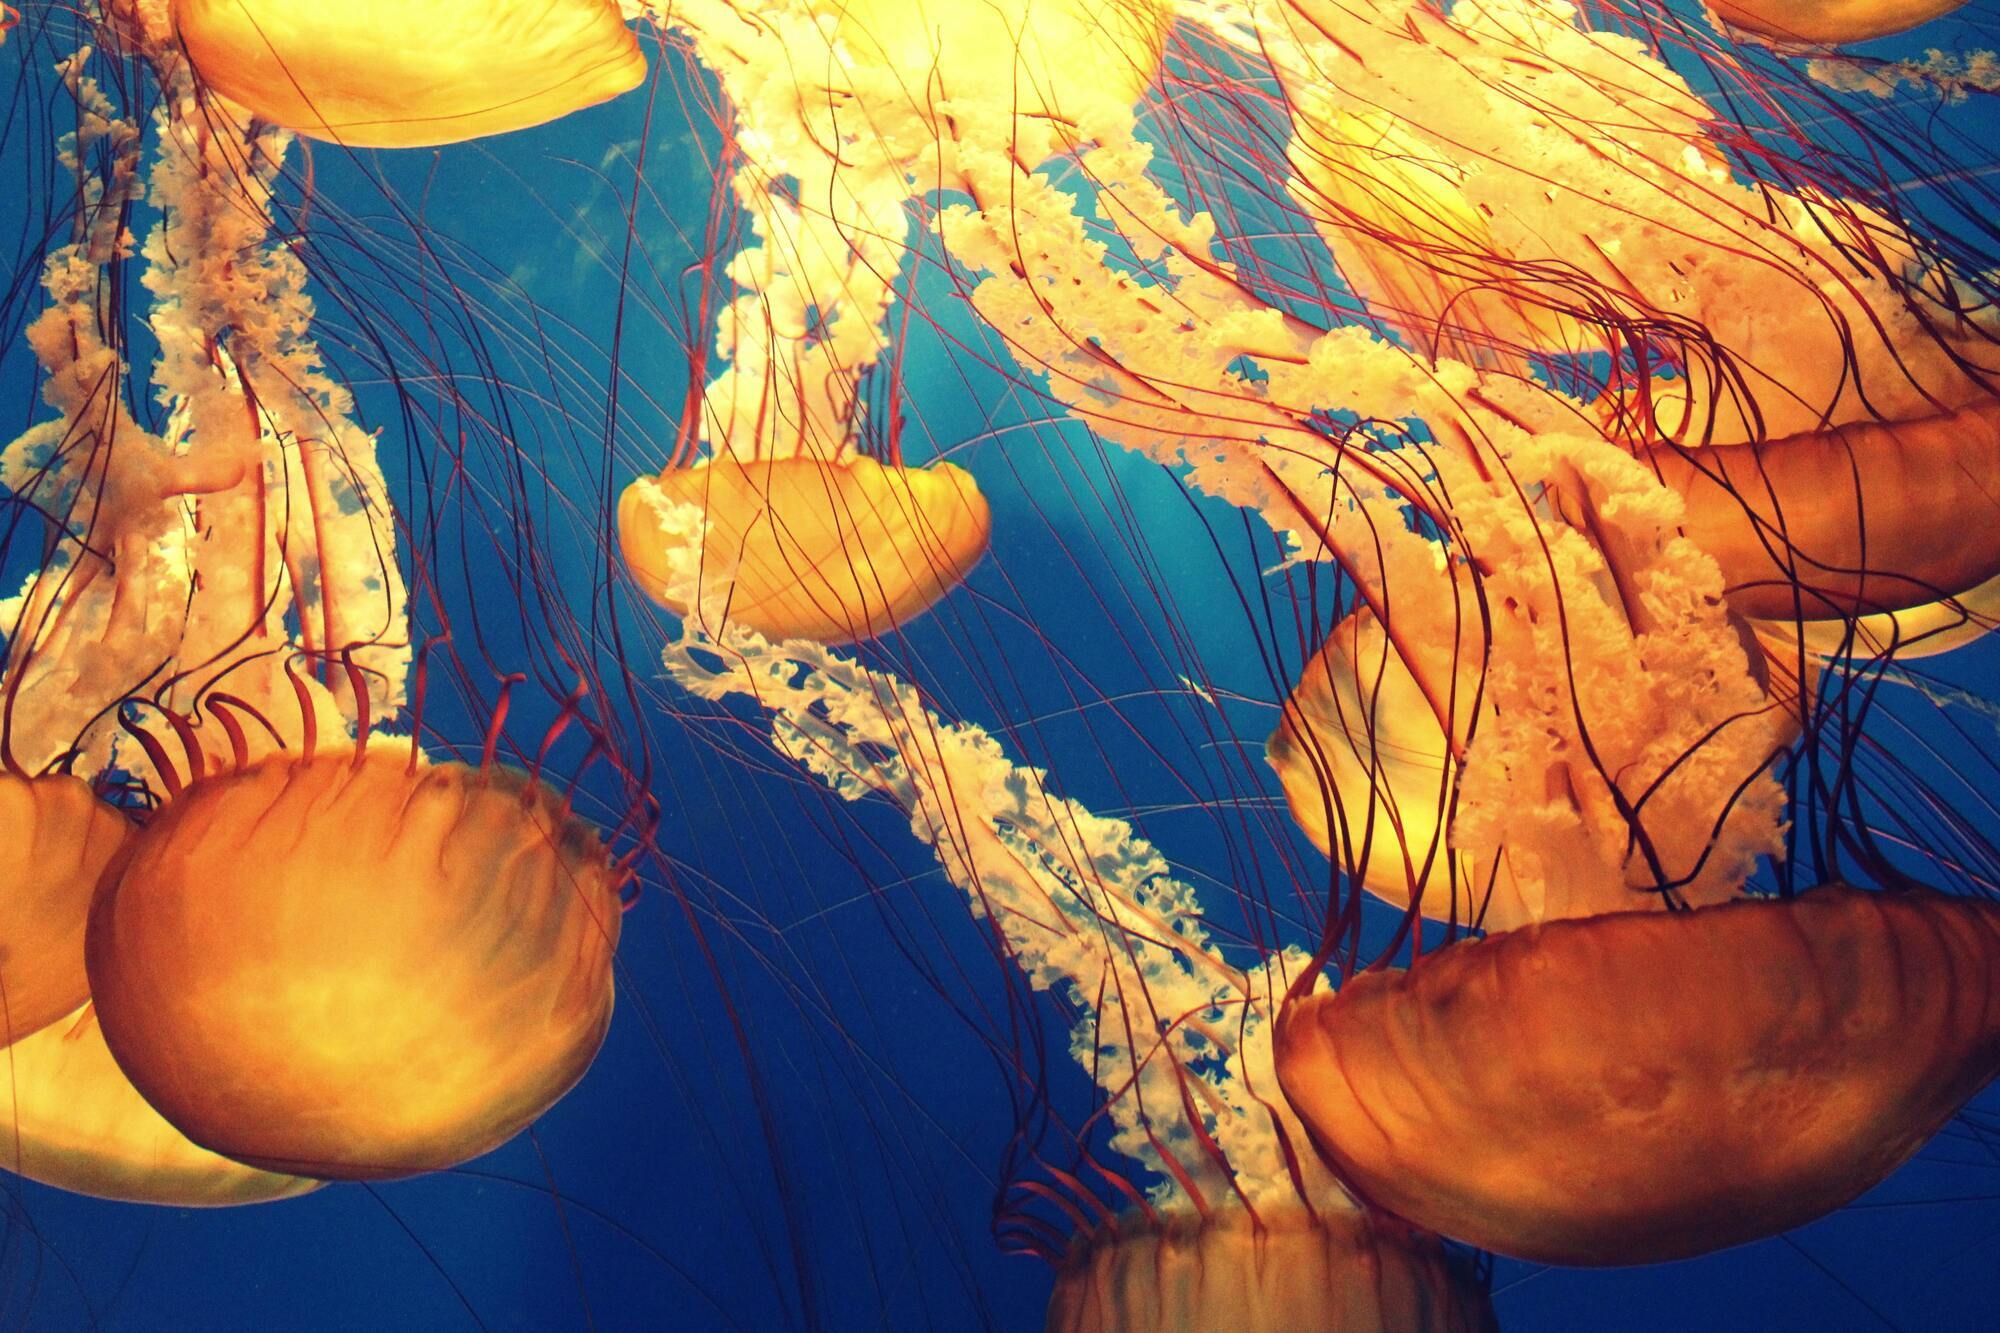 Jellyfish is the spirit animal of Libra